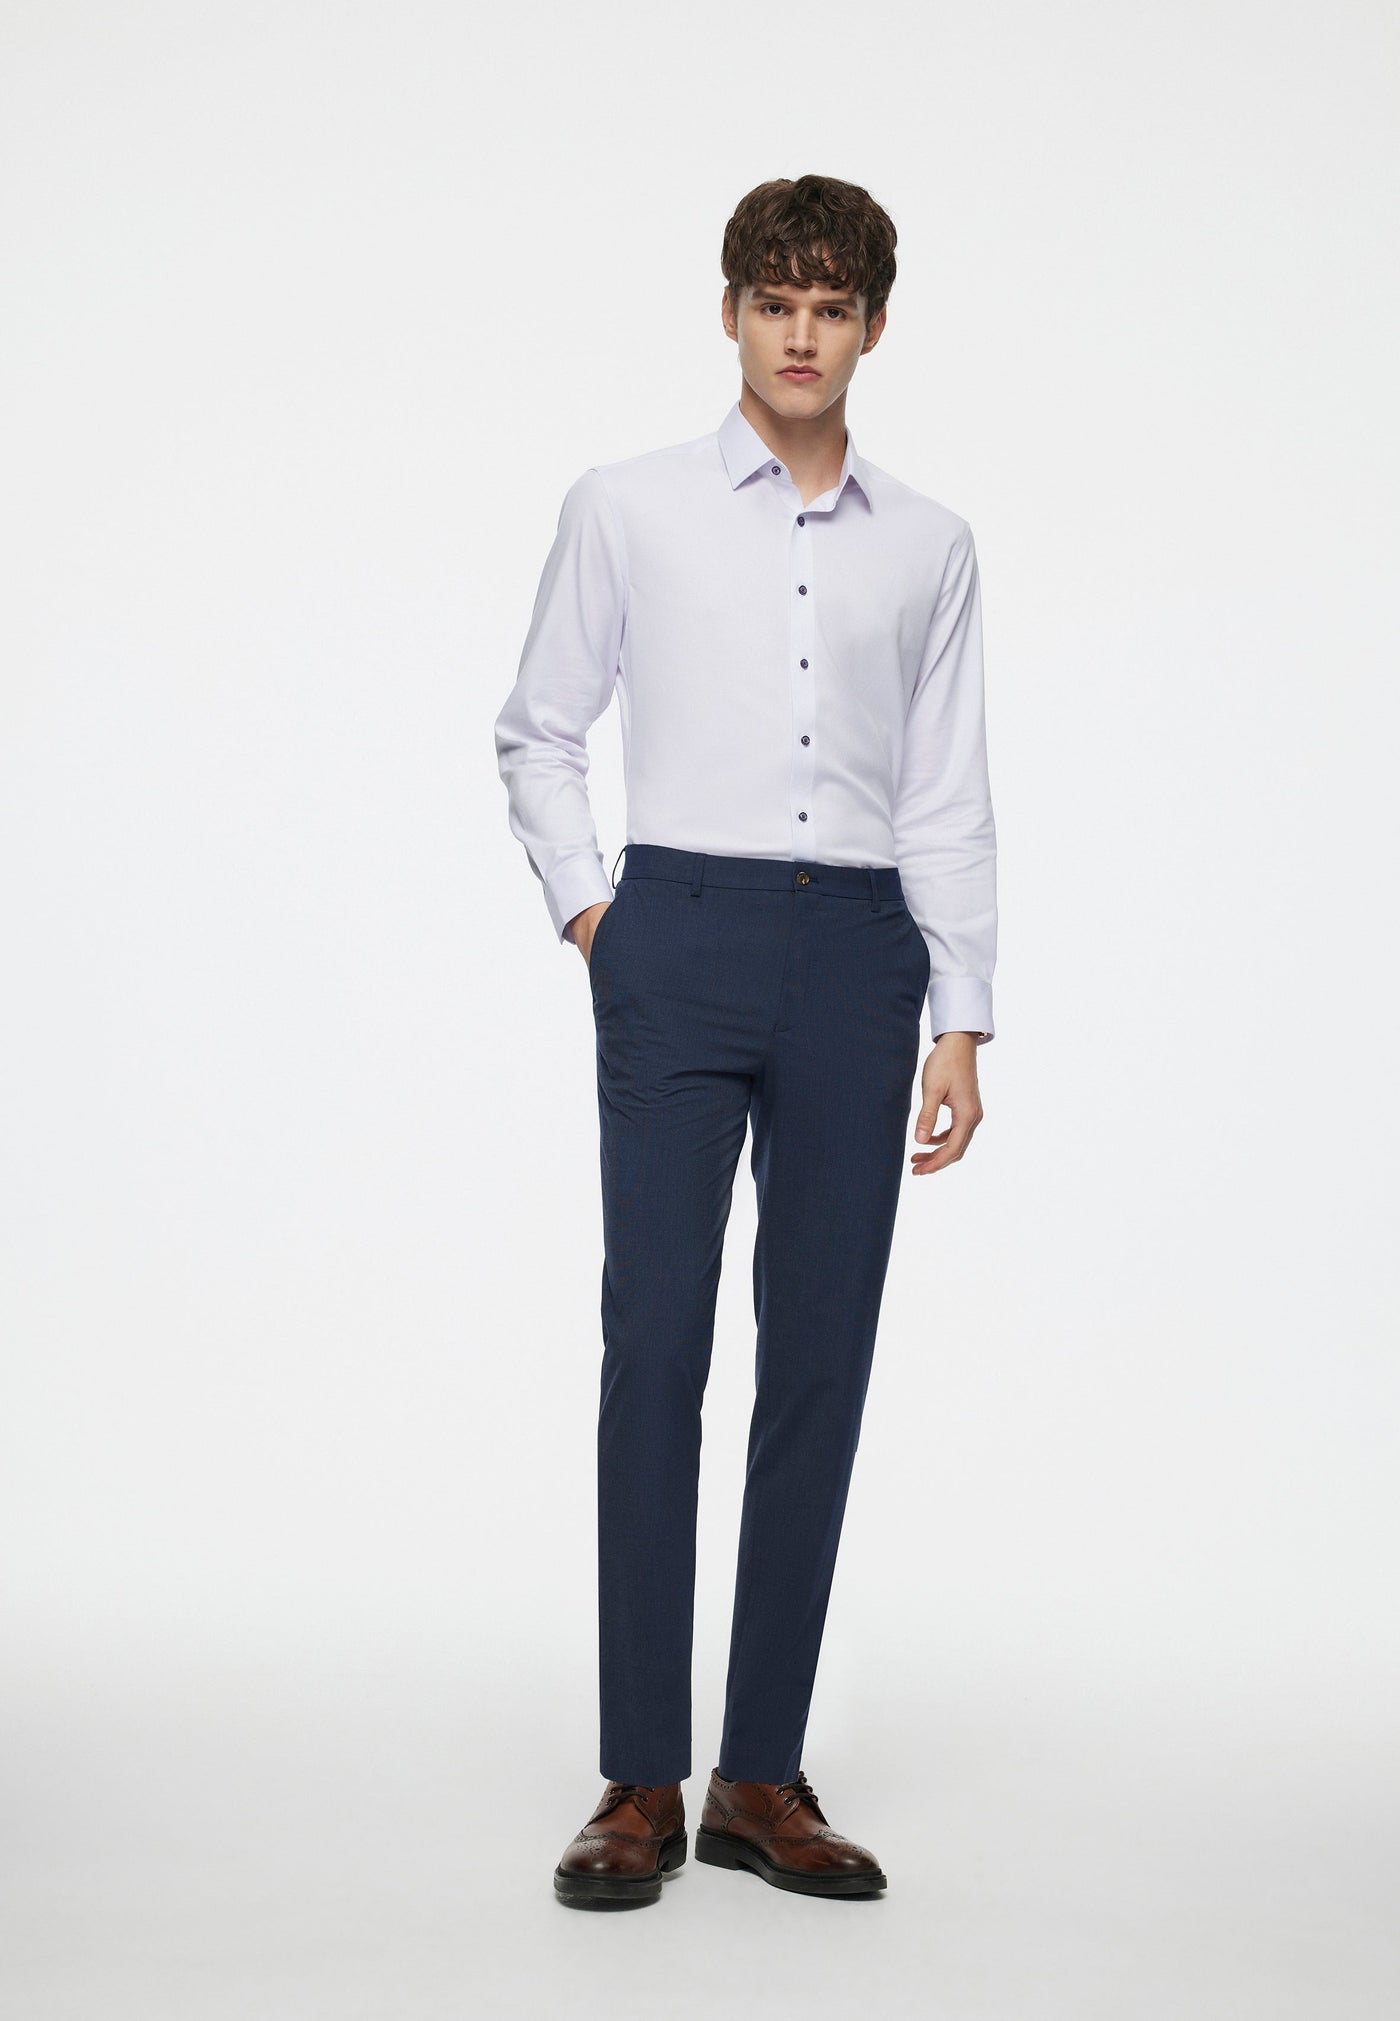 Mennicolas - Non-Iron Cotton Stretch Shirt Smart Fit